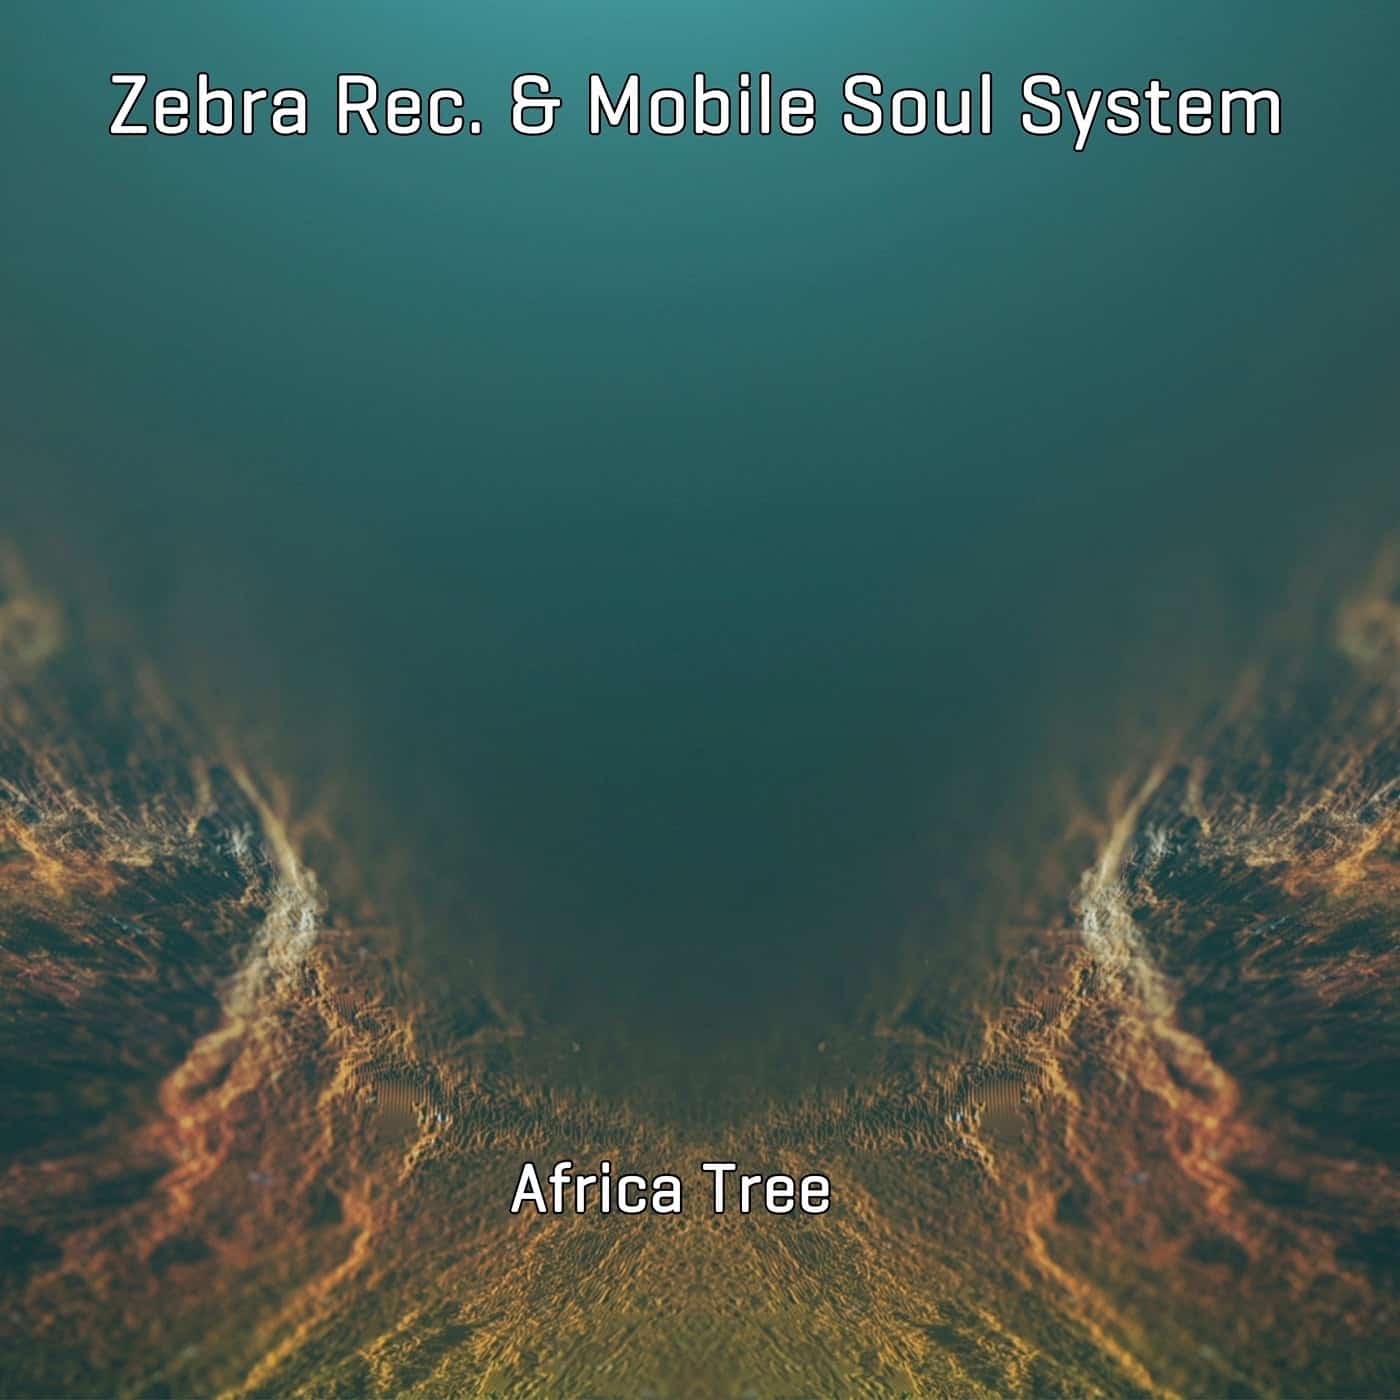 Download Mobile Soul System, Zebra Rec. - Africa Tree on Electrobuzz